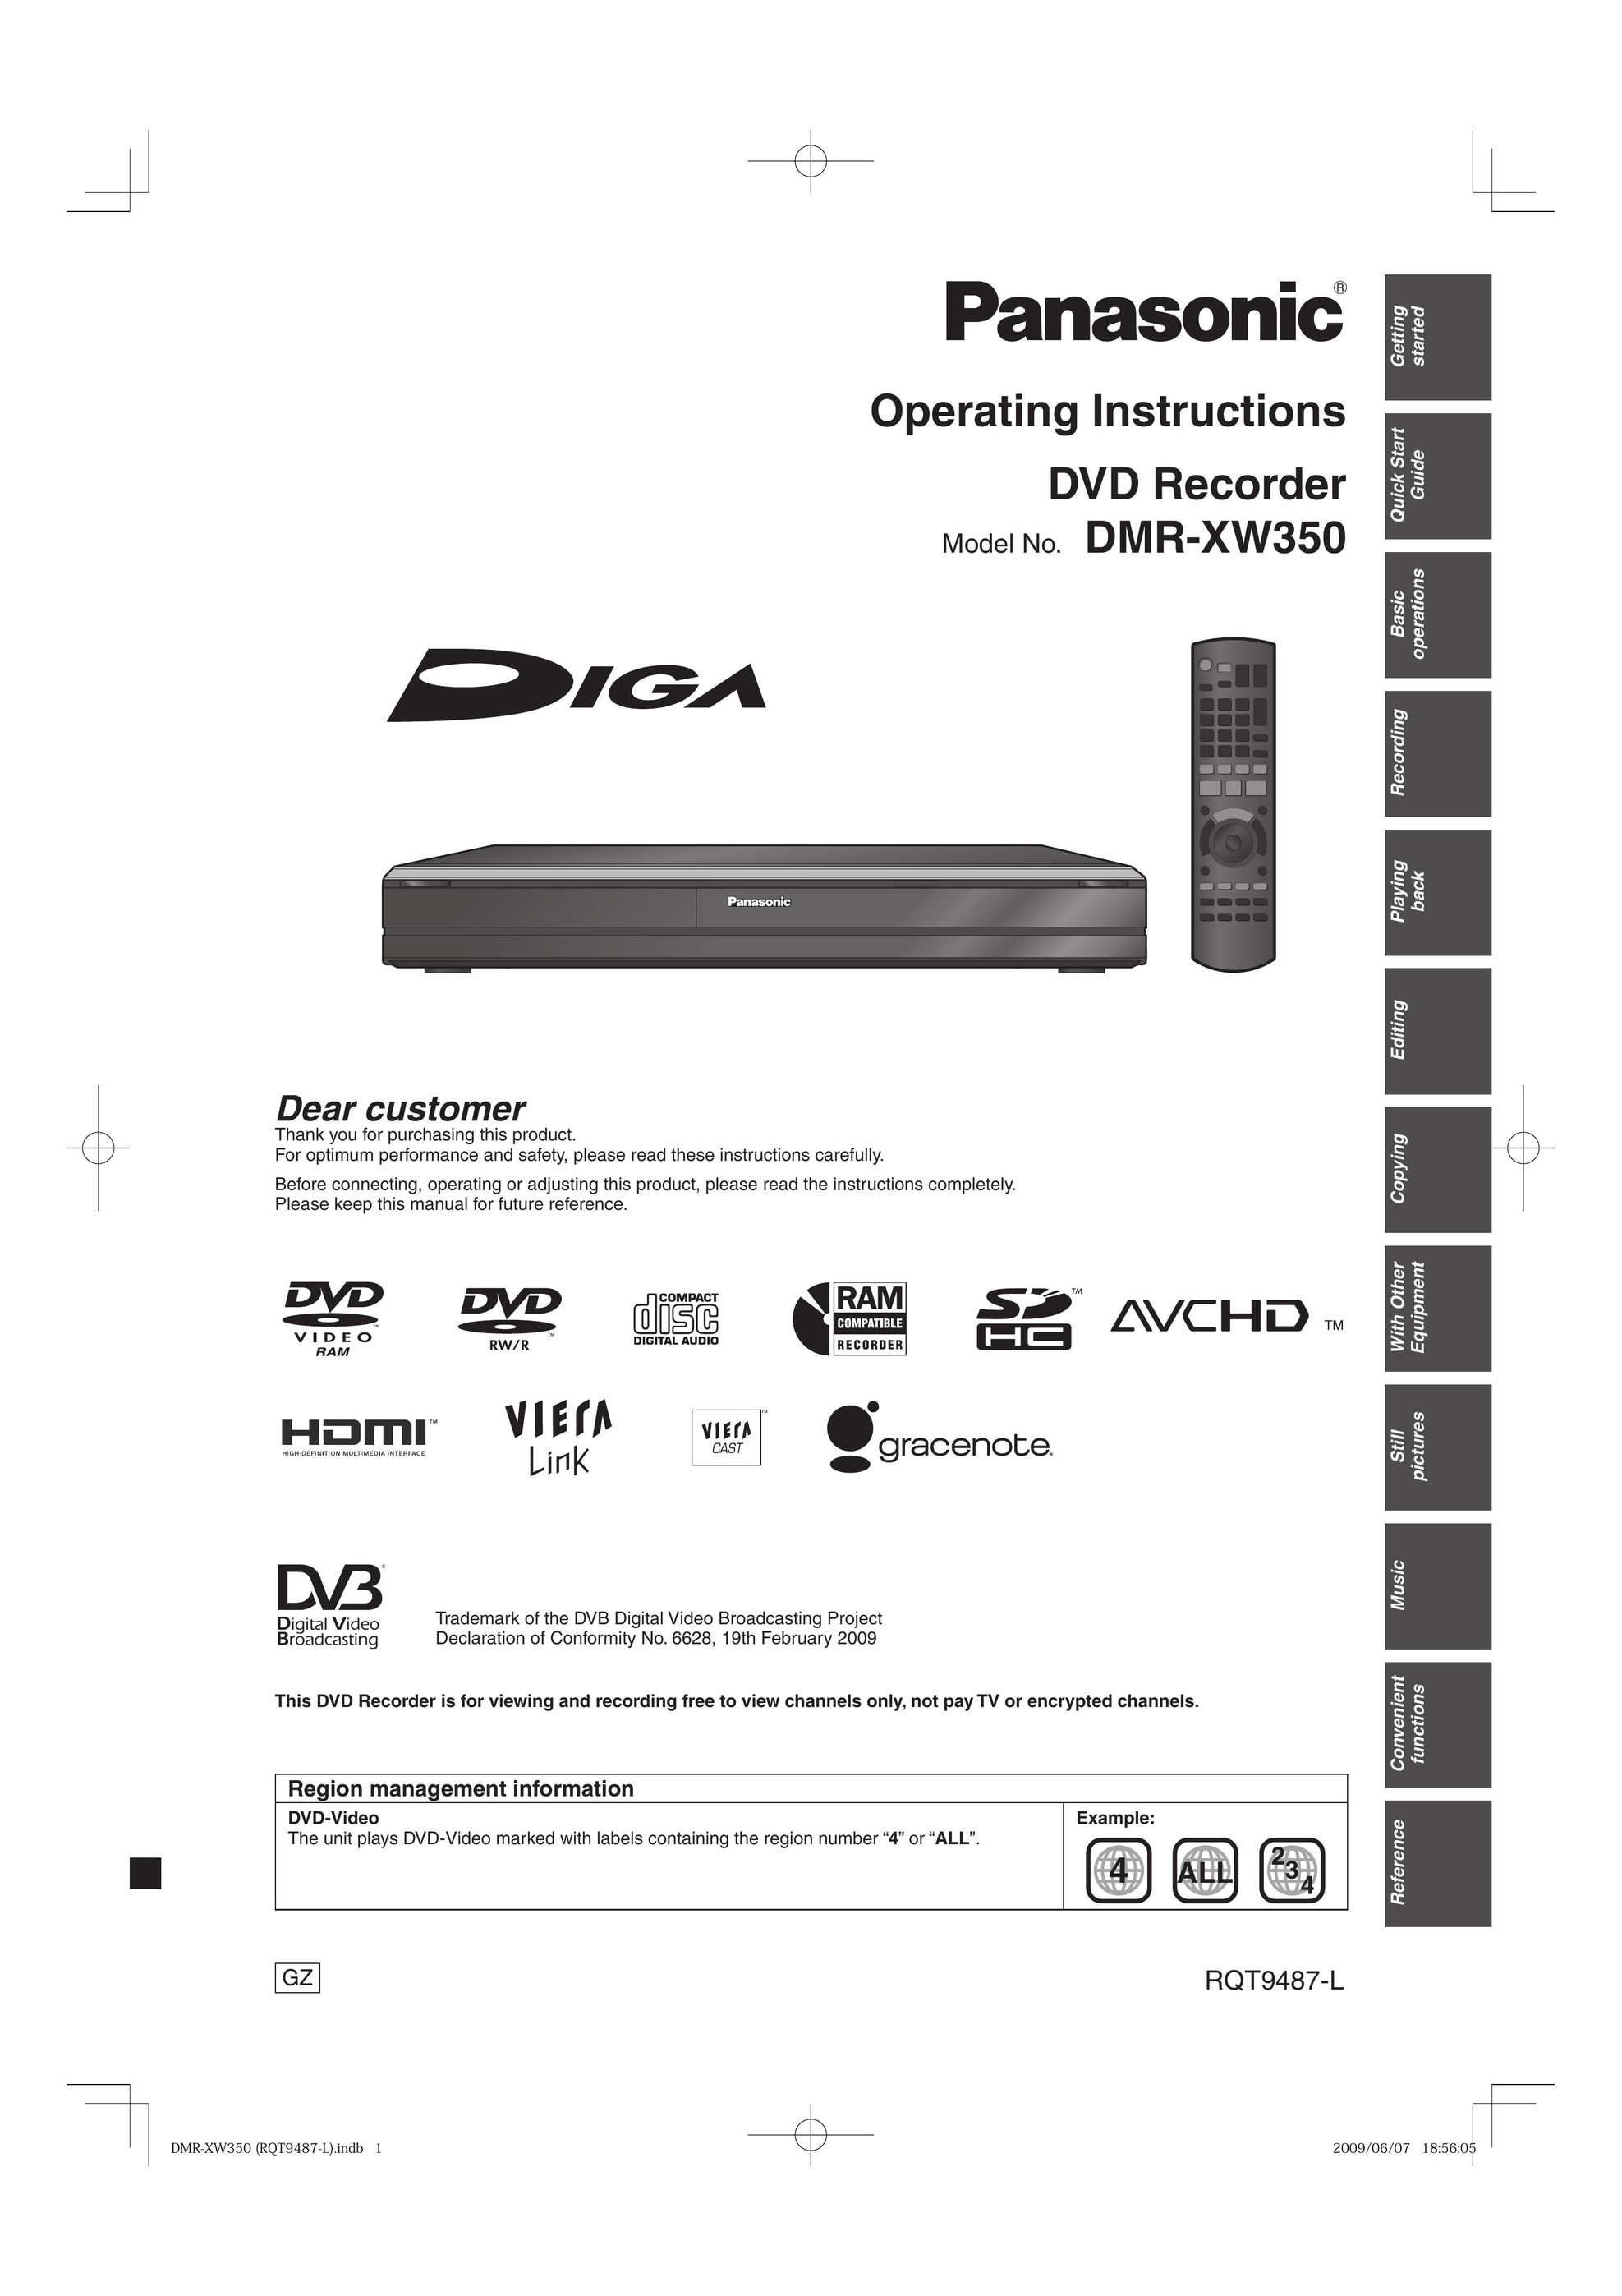 Panasonic DMR-XW350 DVR User Manual